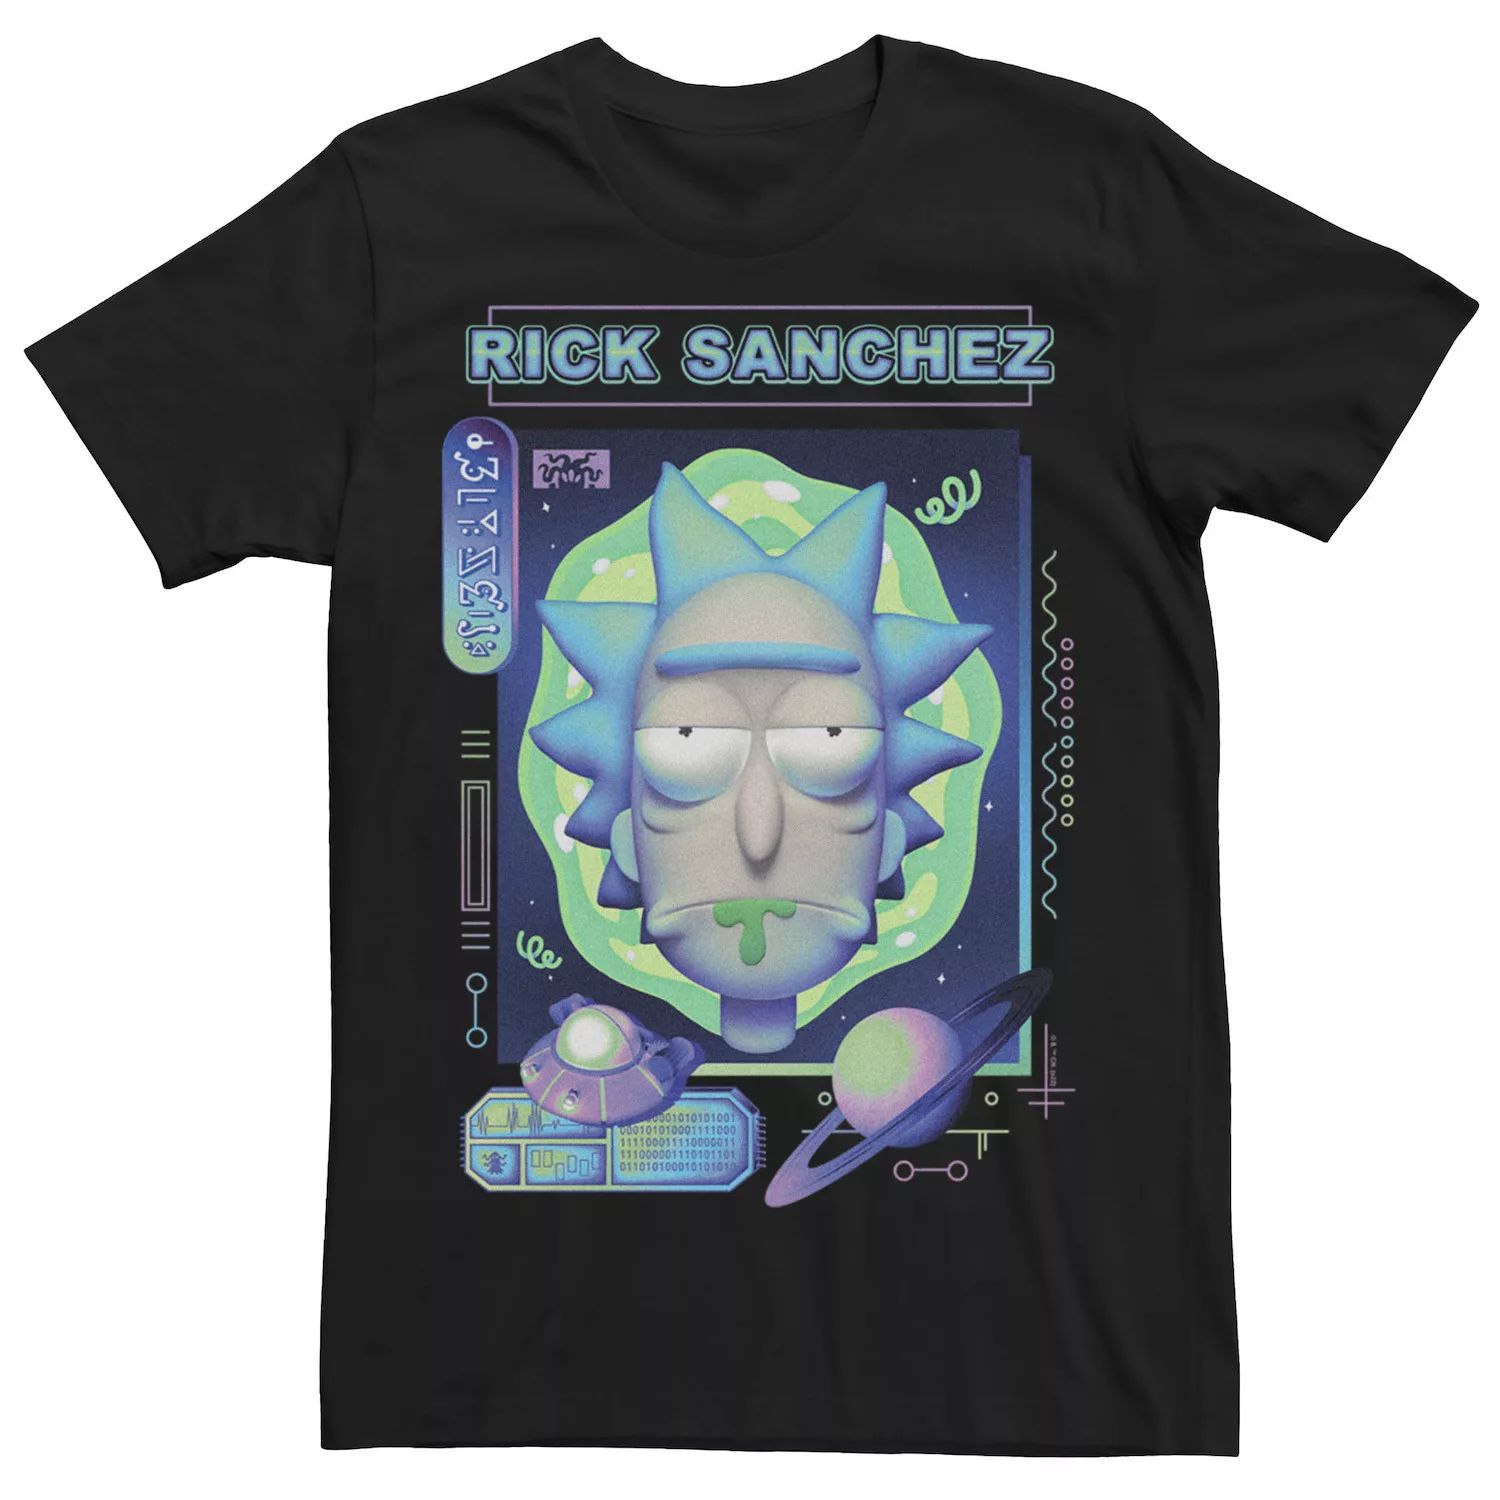 Мужская футболка с большим лицом «Рик и Морти Санчес» Licensed Character рюкзак рик санчес зеленый 8